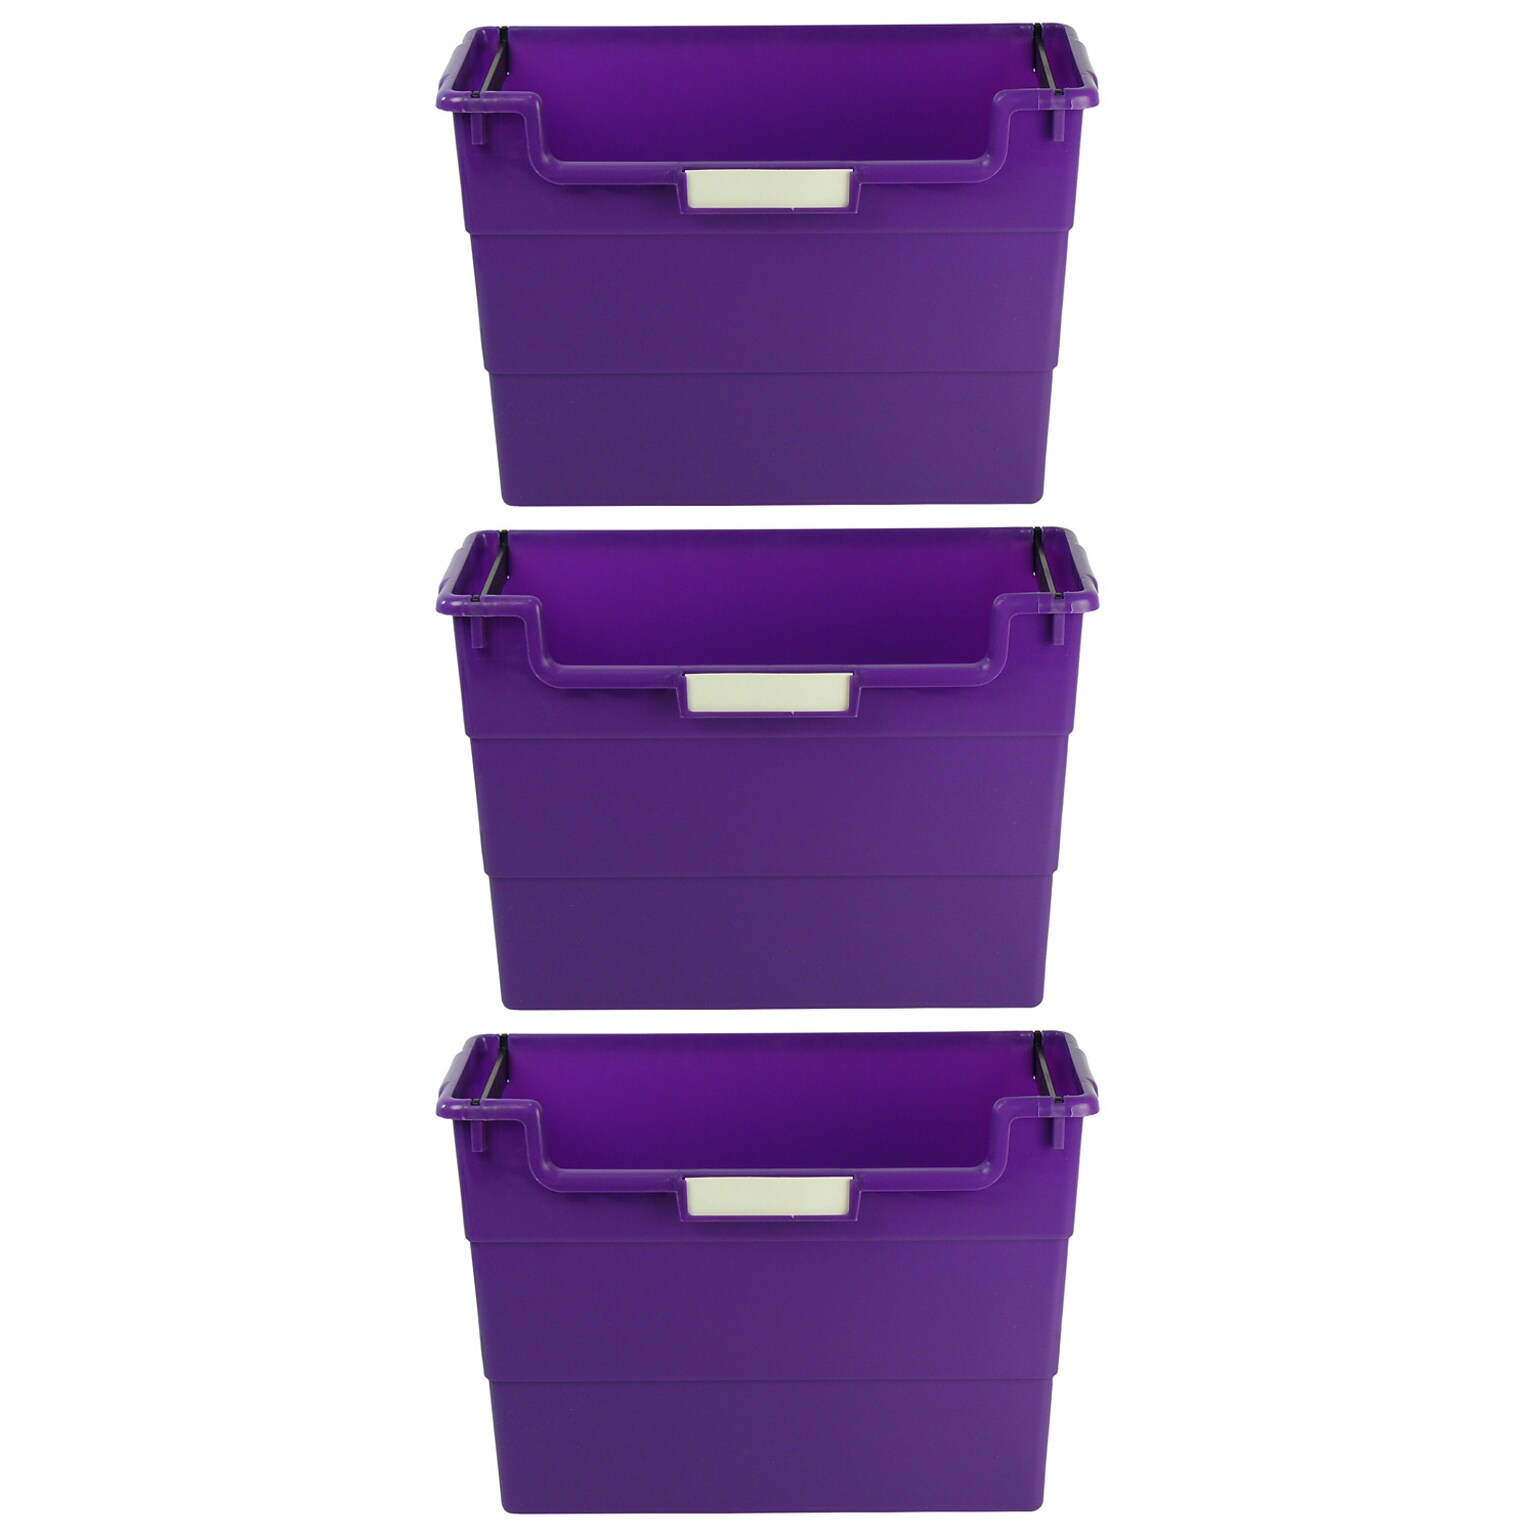 Romanoff Plastic Desk Top Organizer, 14 x 6 x 10, Purple, Pack of 3 (ROM77606-3)